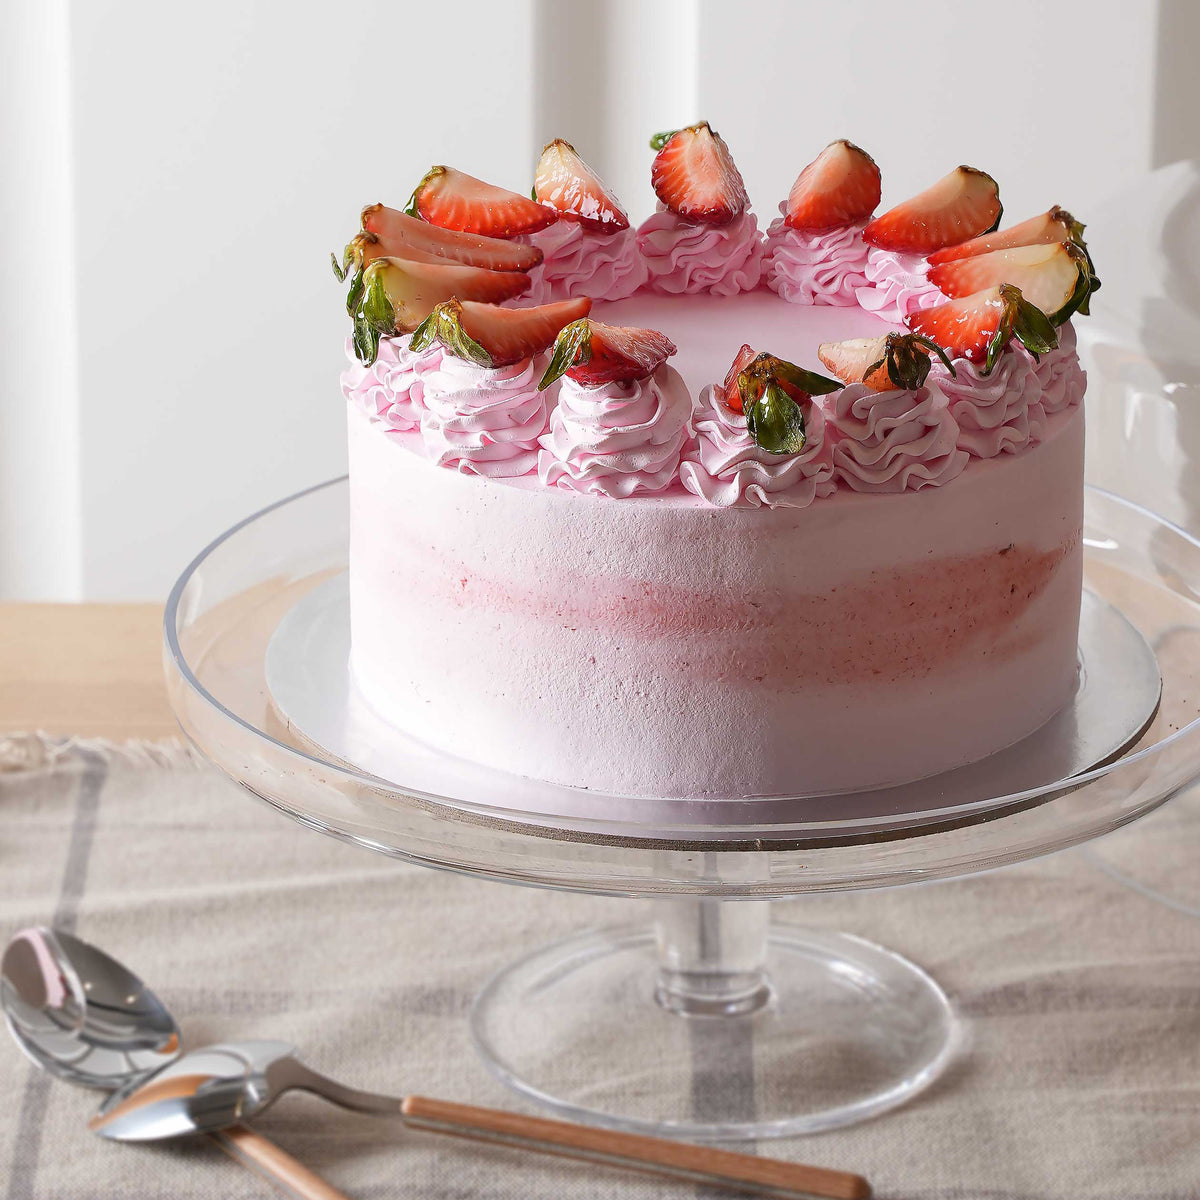 Vanilla Strawberry Cake